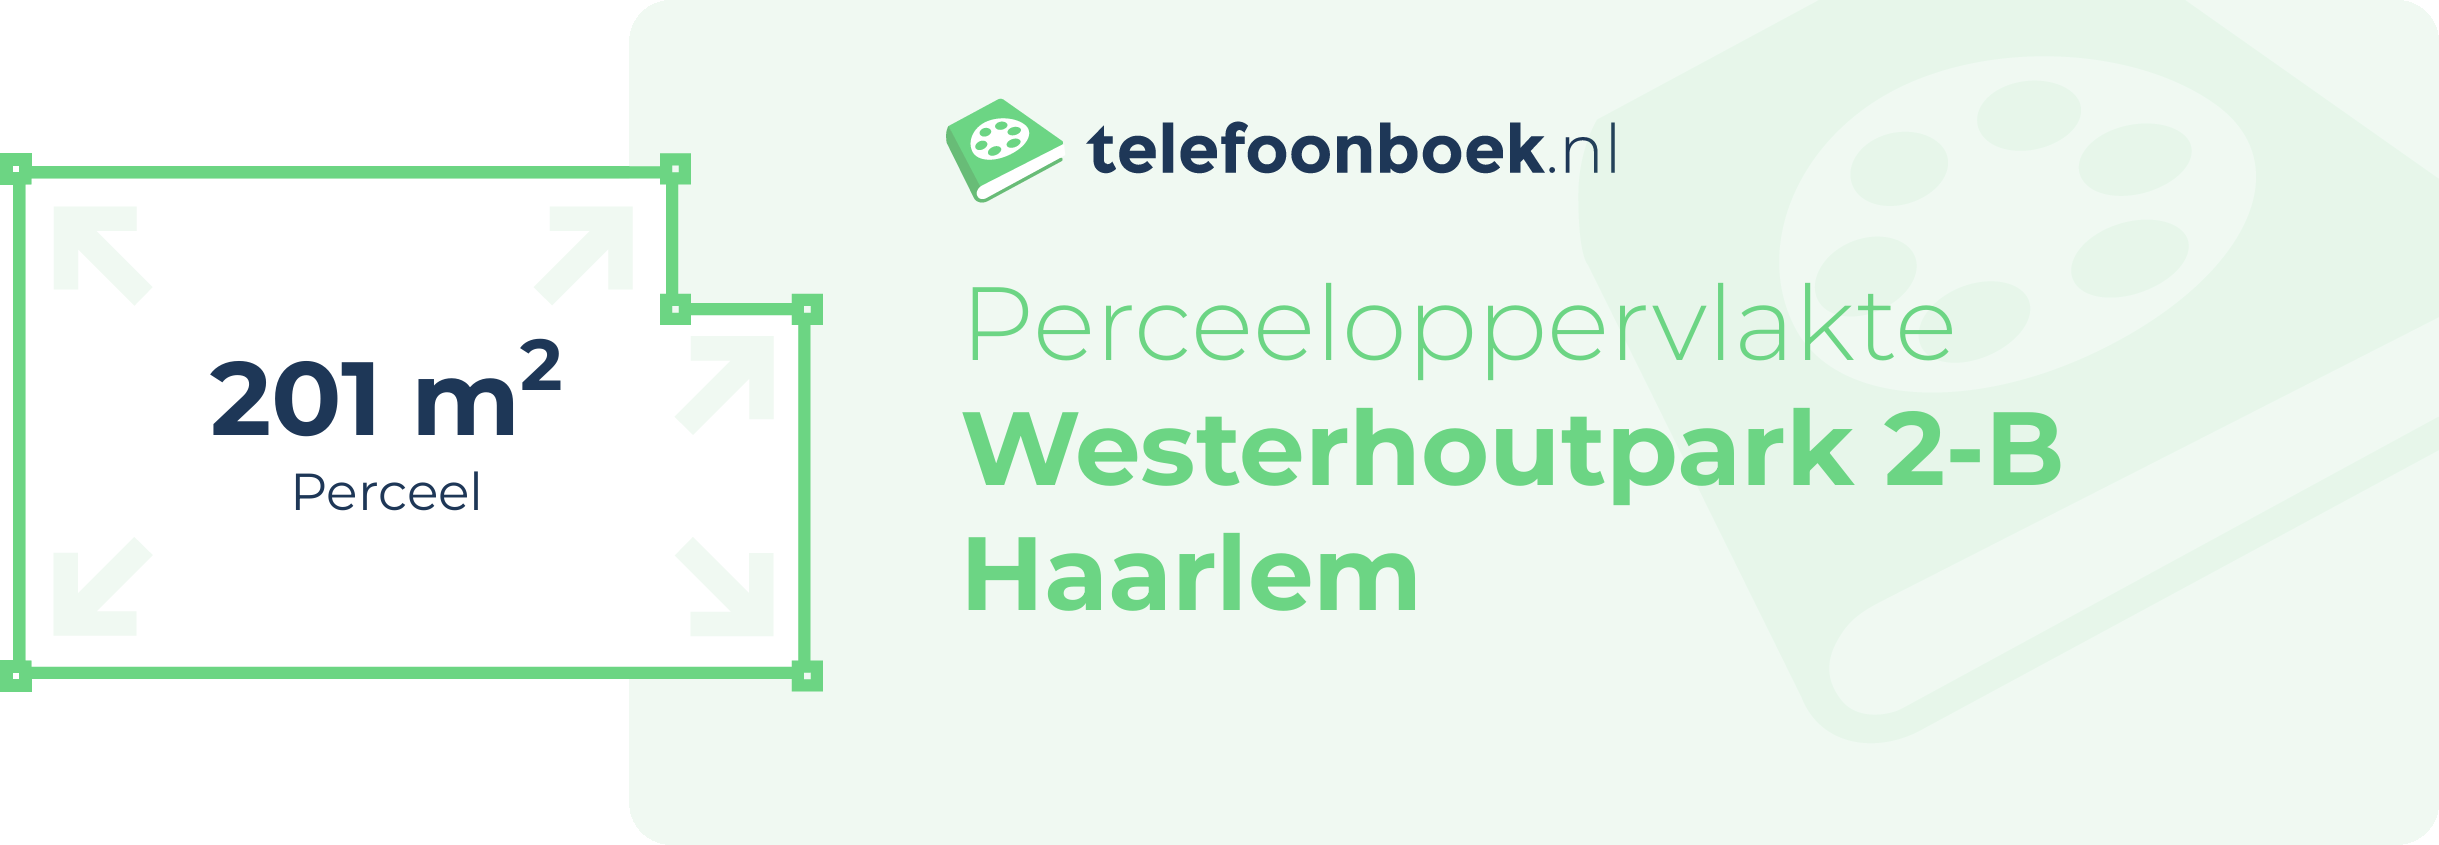 Perceeloppervlakte Westerhoutpark 2-B Haarlem